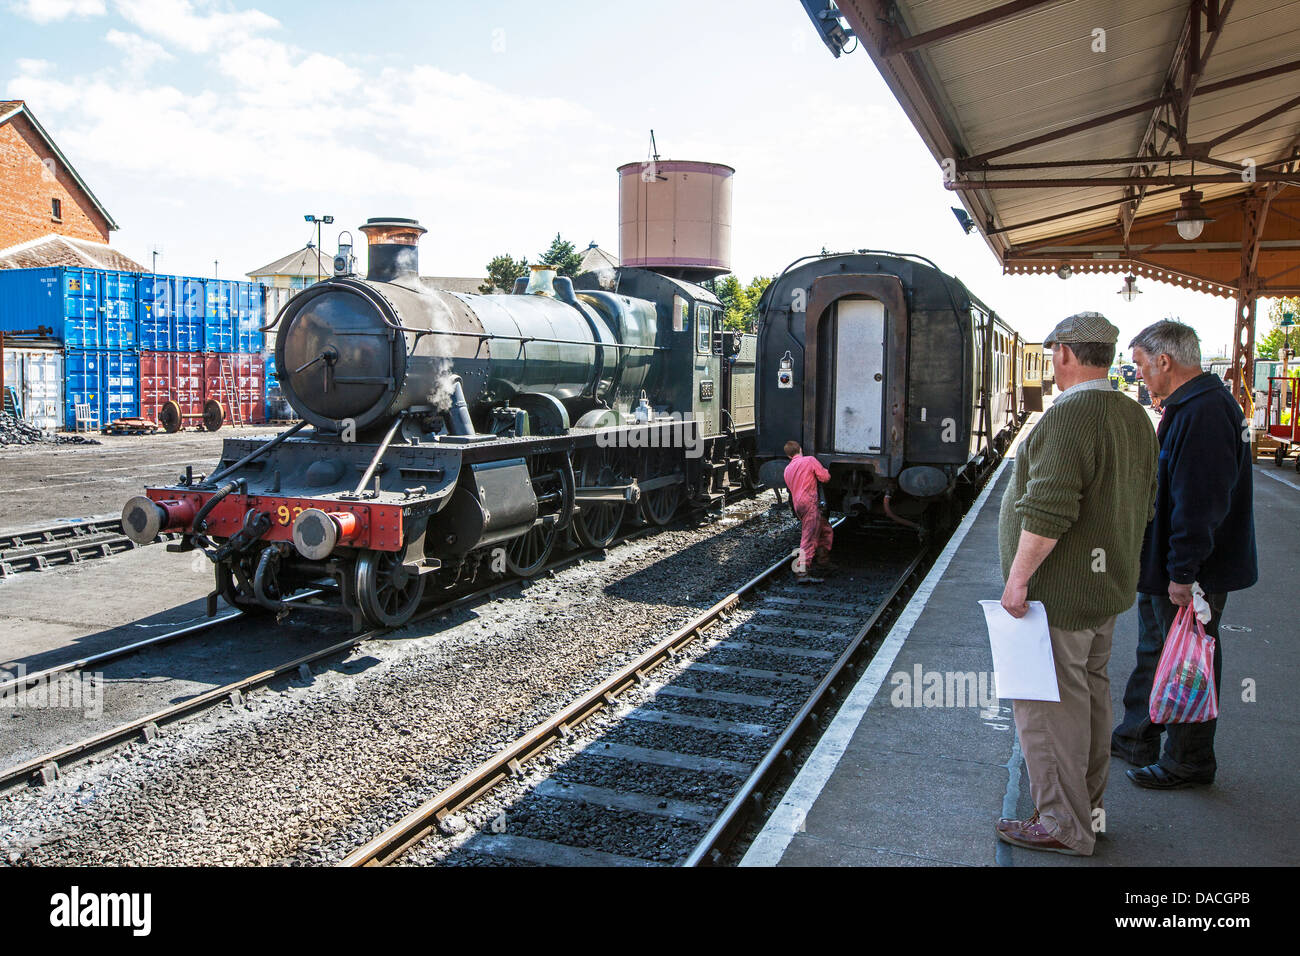 Steam Train Minehead Railway Station West Somerset Railway Minehead, Somerset UK Europe Stockfoto